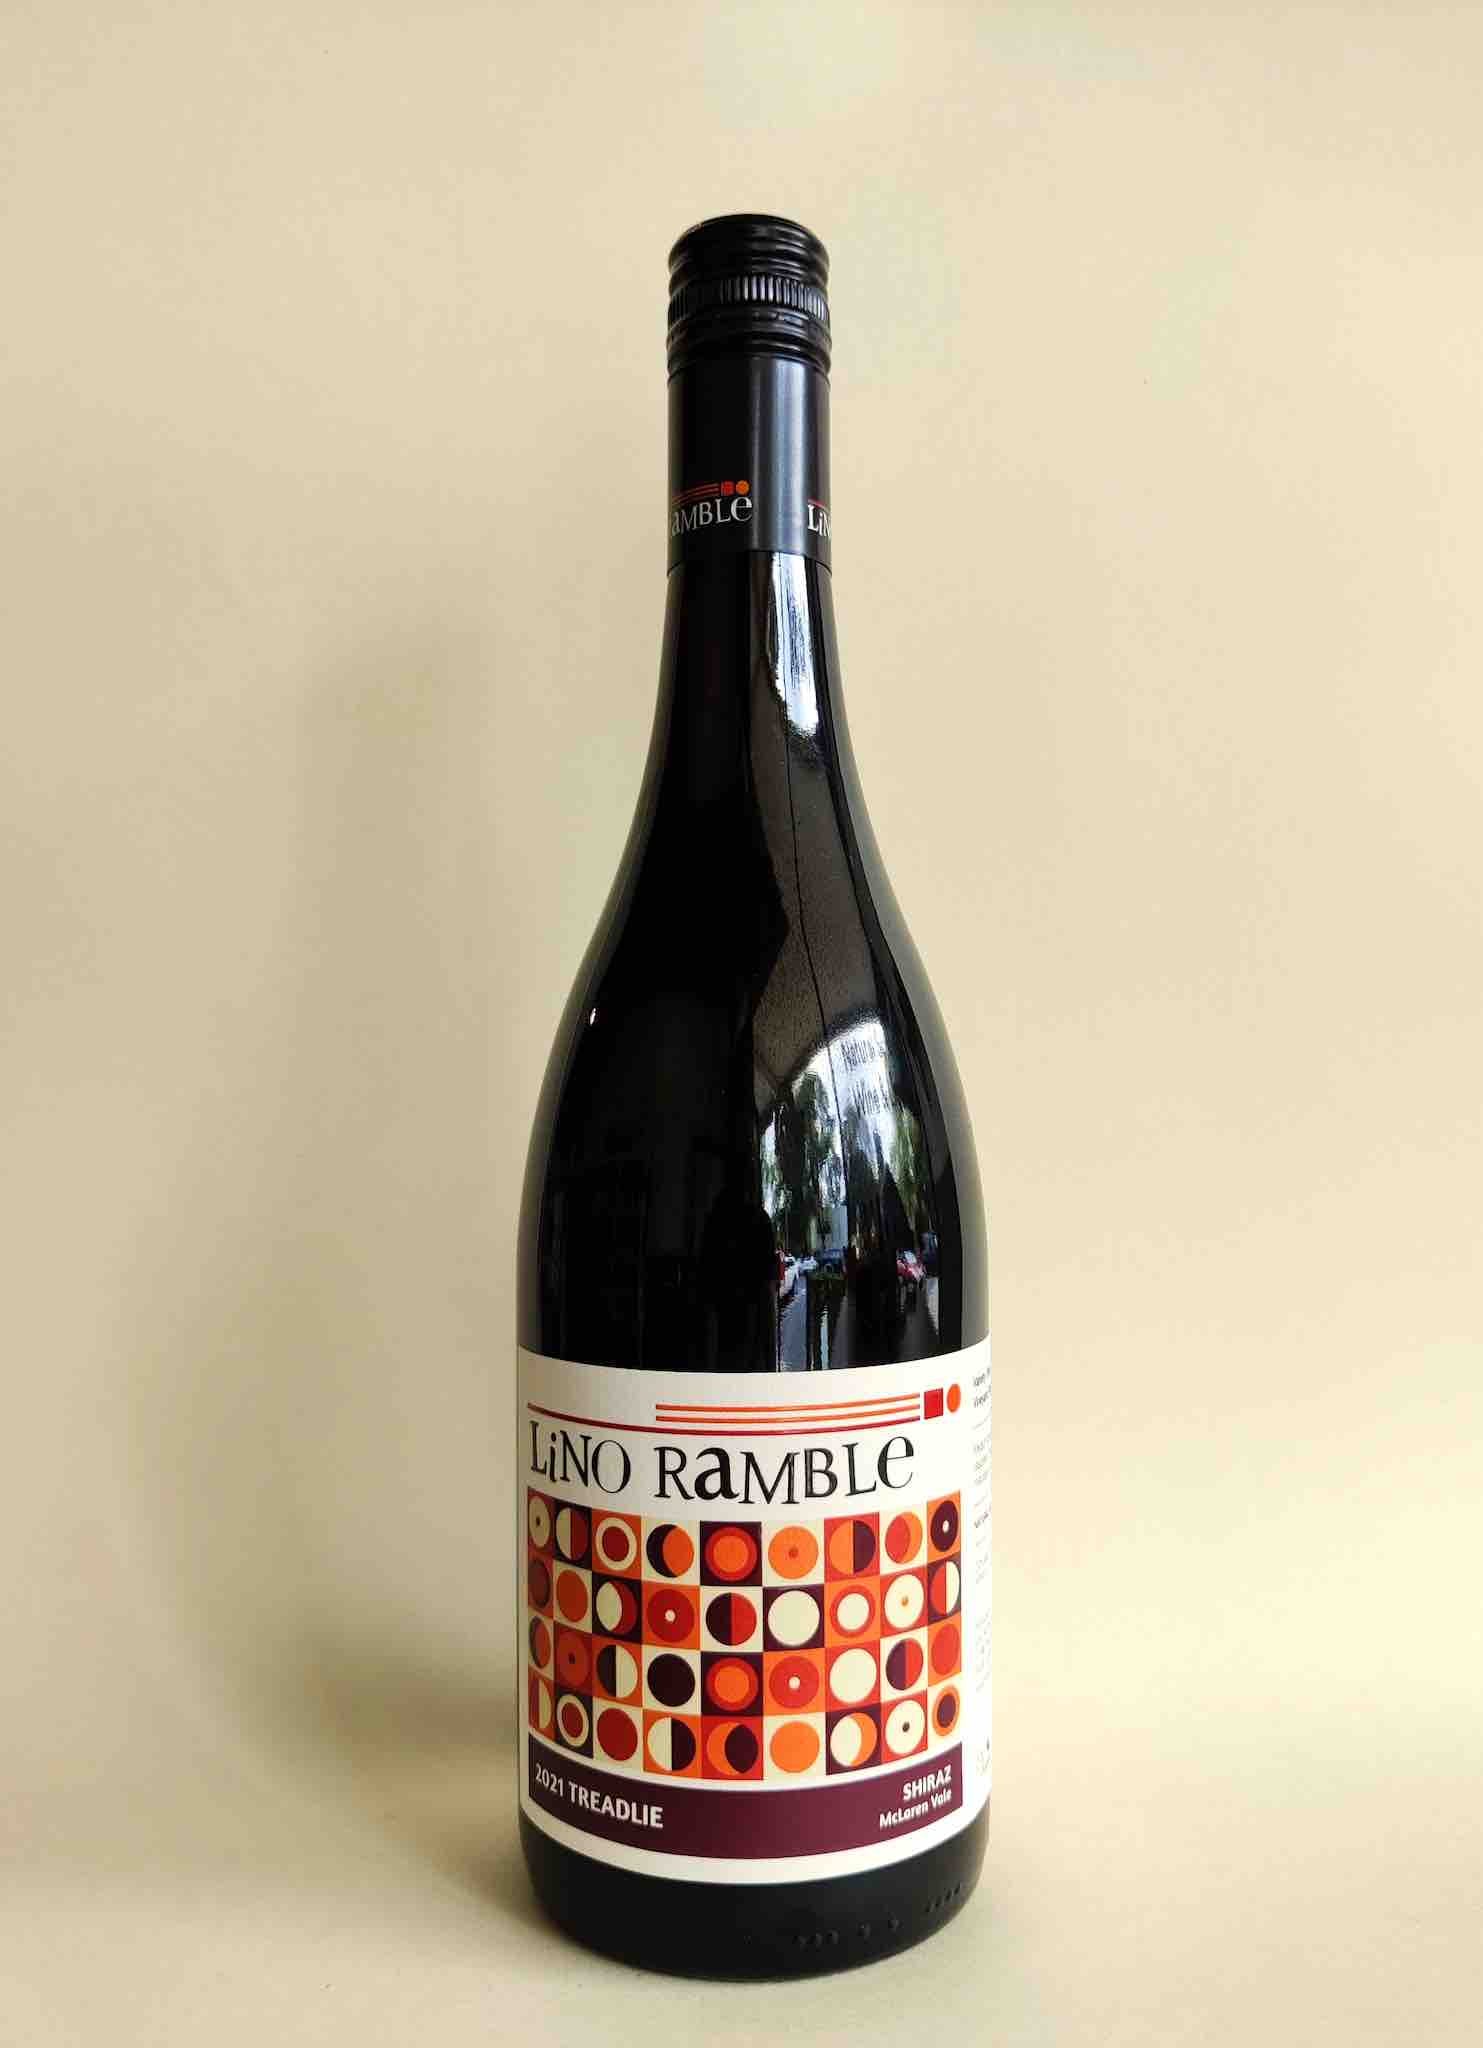 A bottle of 2021 Lino Ramble Treadlie Shiraz red wine from McLaren Vale, South Australia.